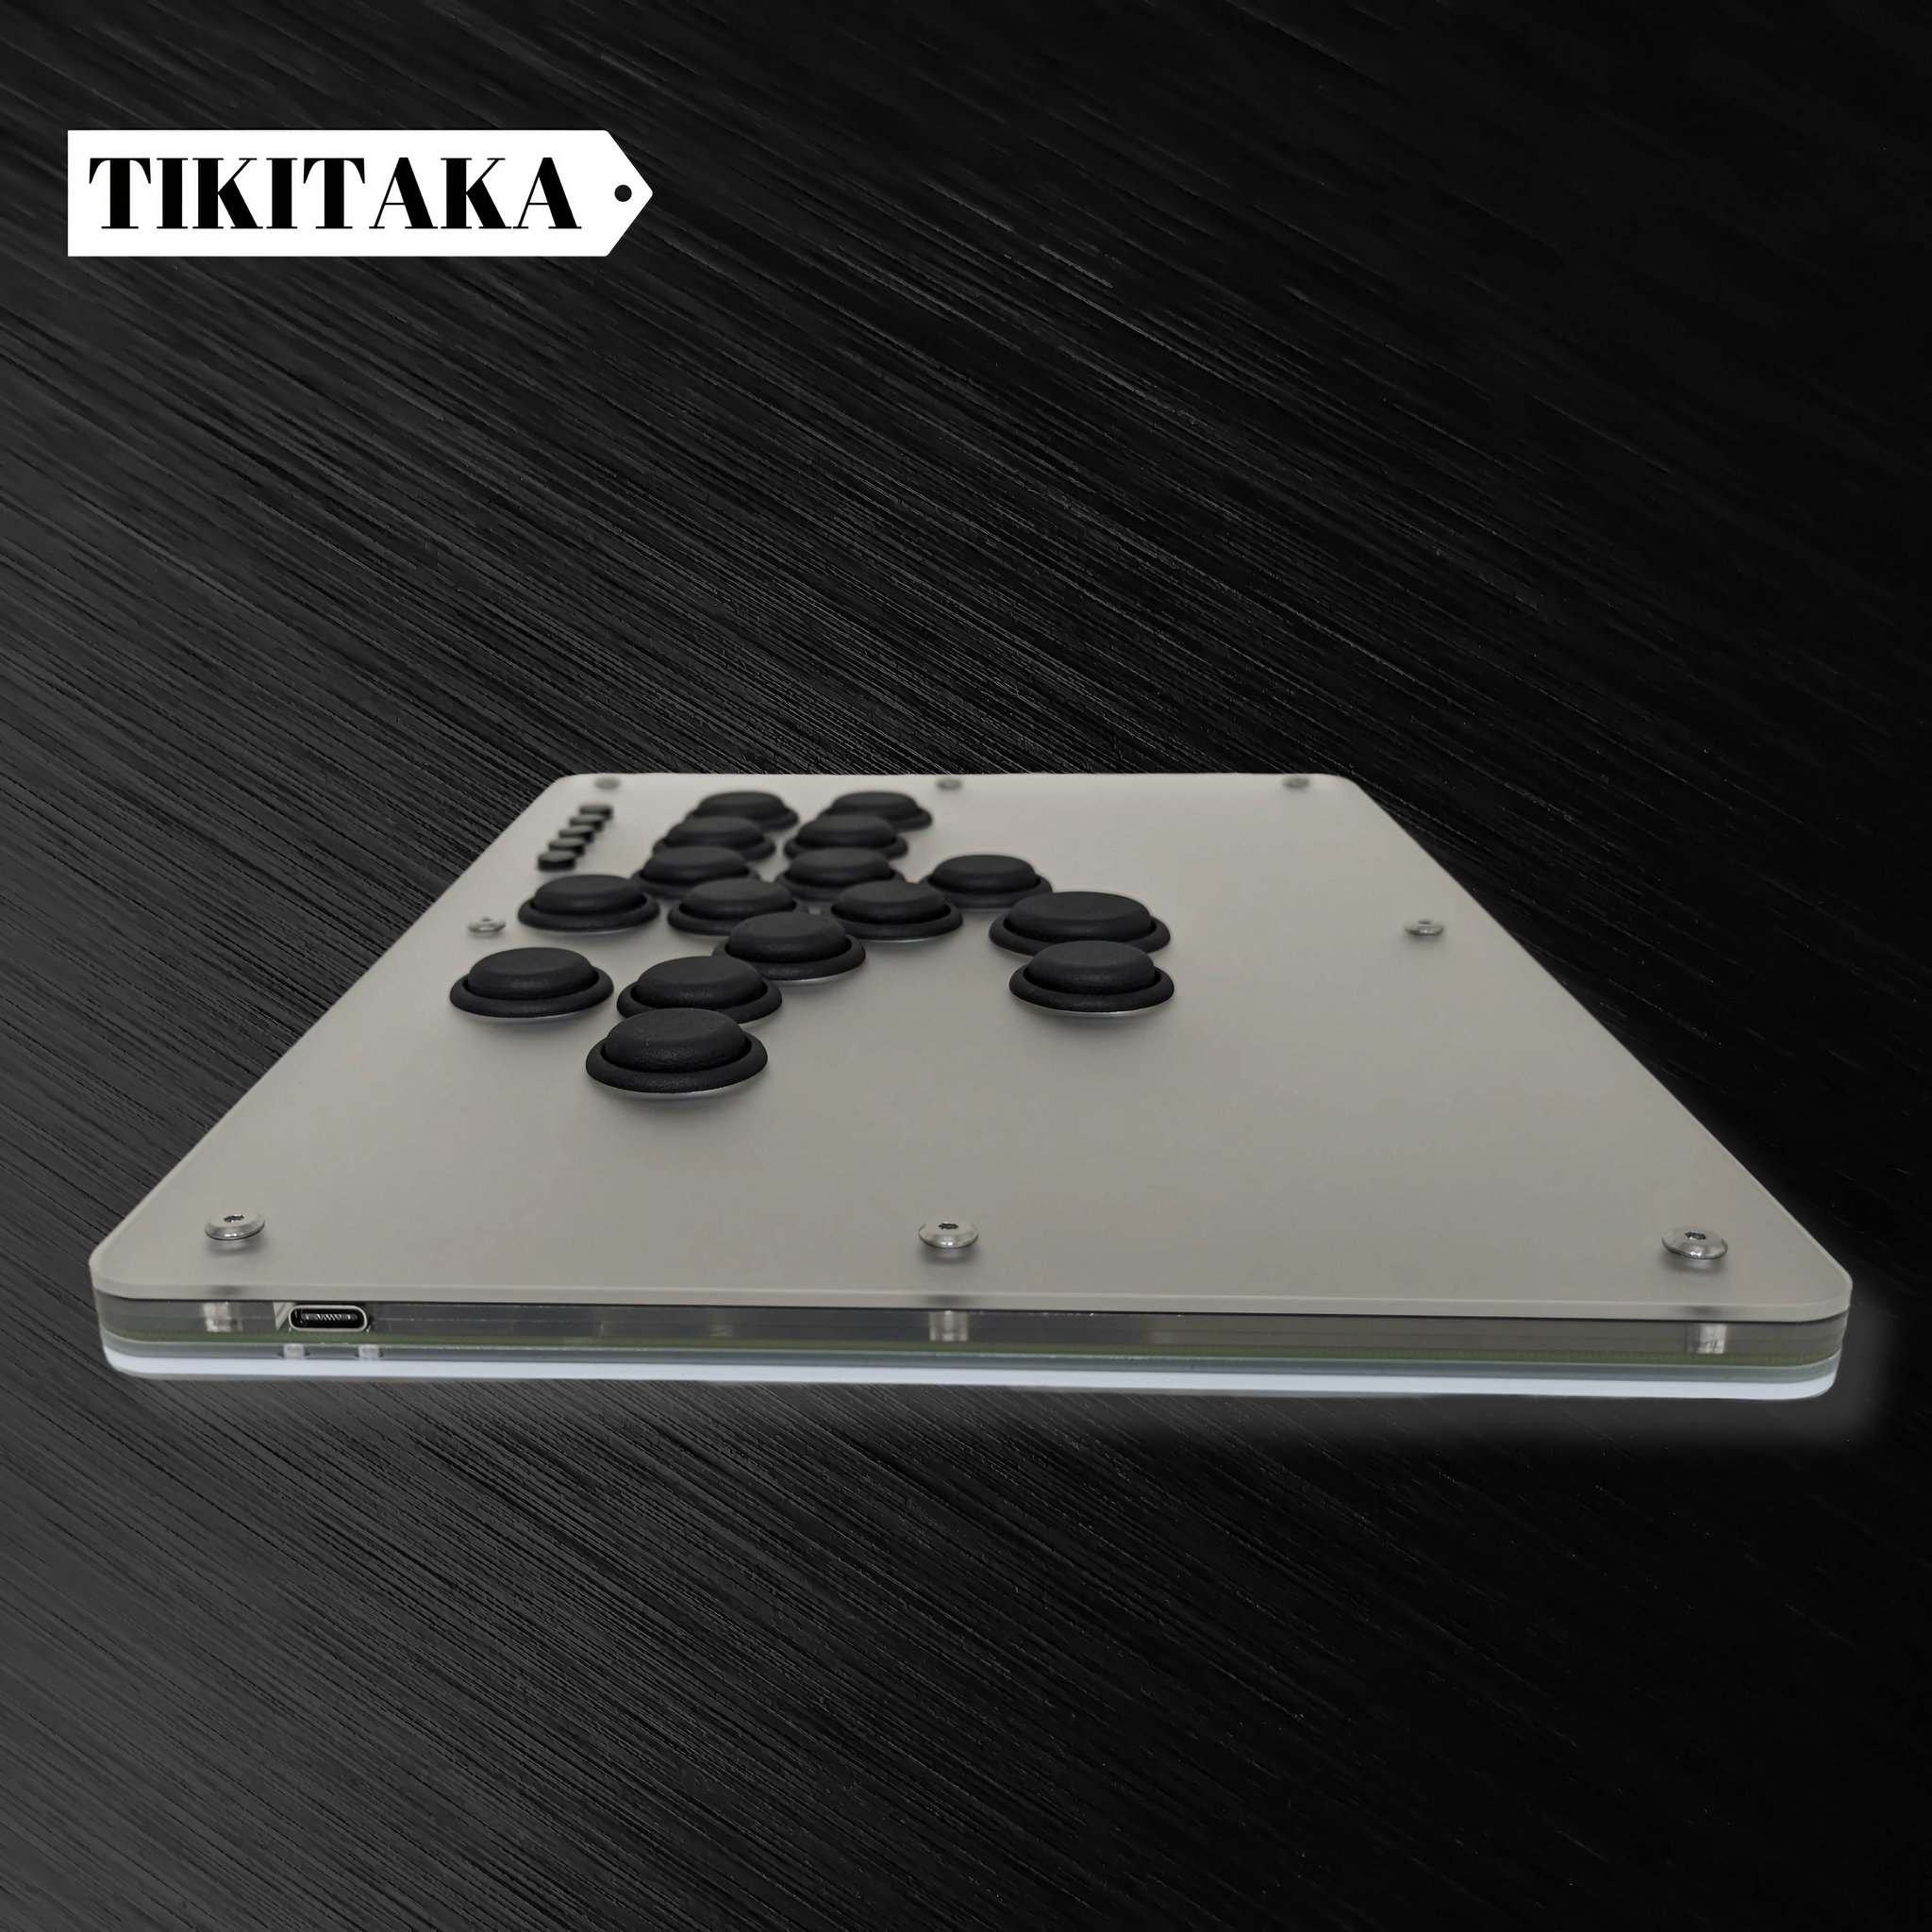 Tikitaka FTG Board アップグレード版 - アップグレード版